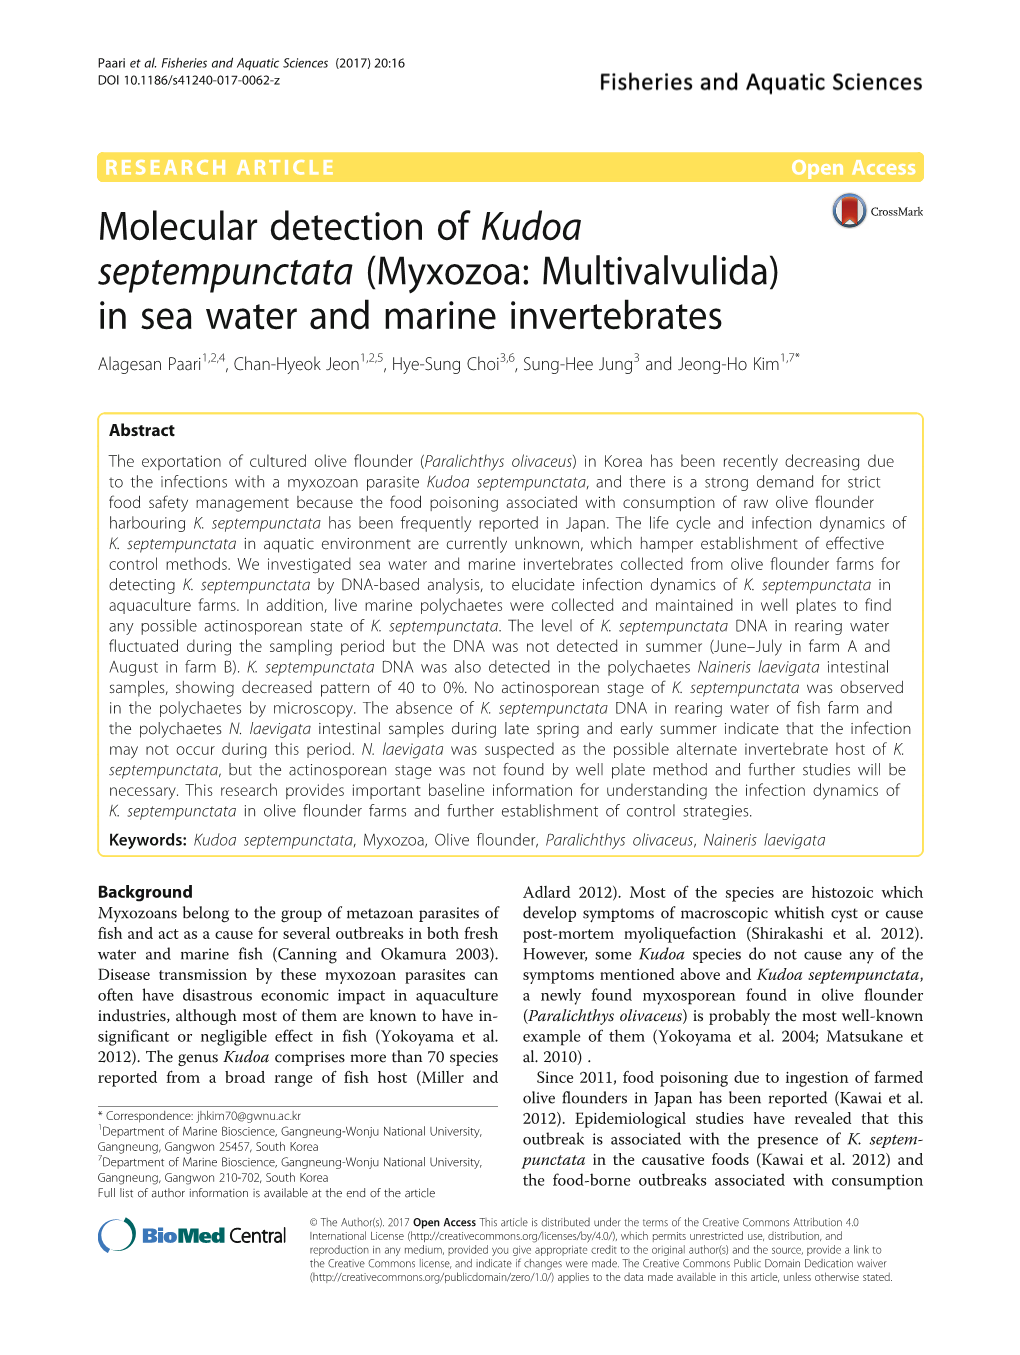 Molecular Detection of Kudoa Septempunctata